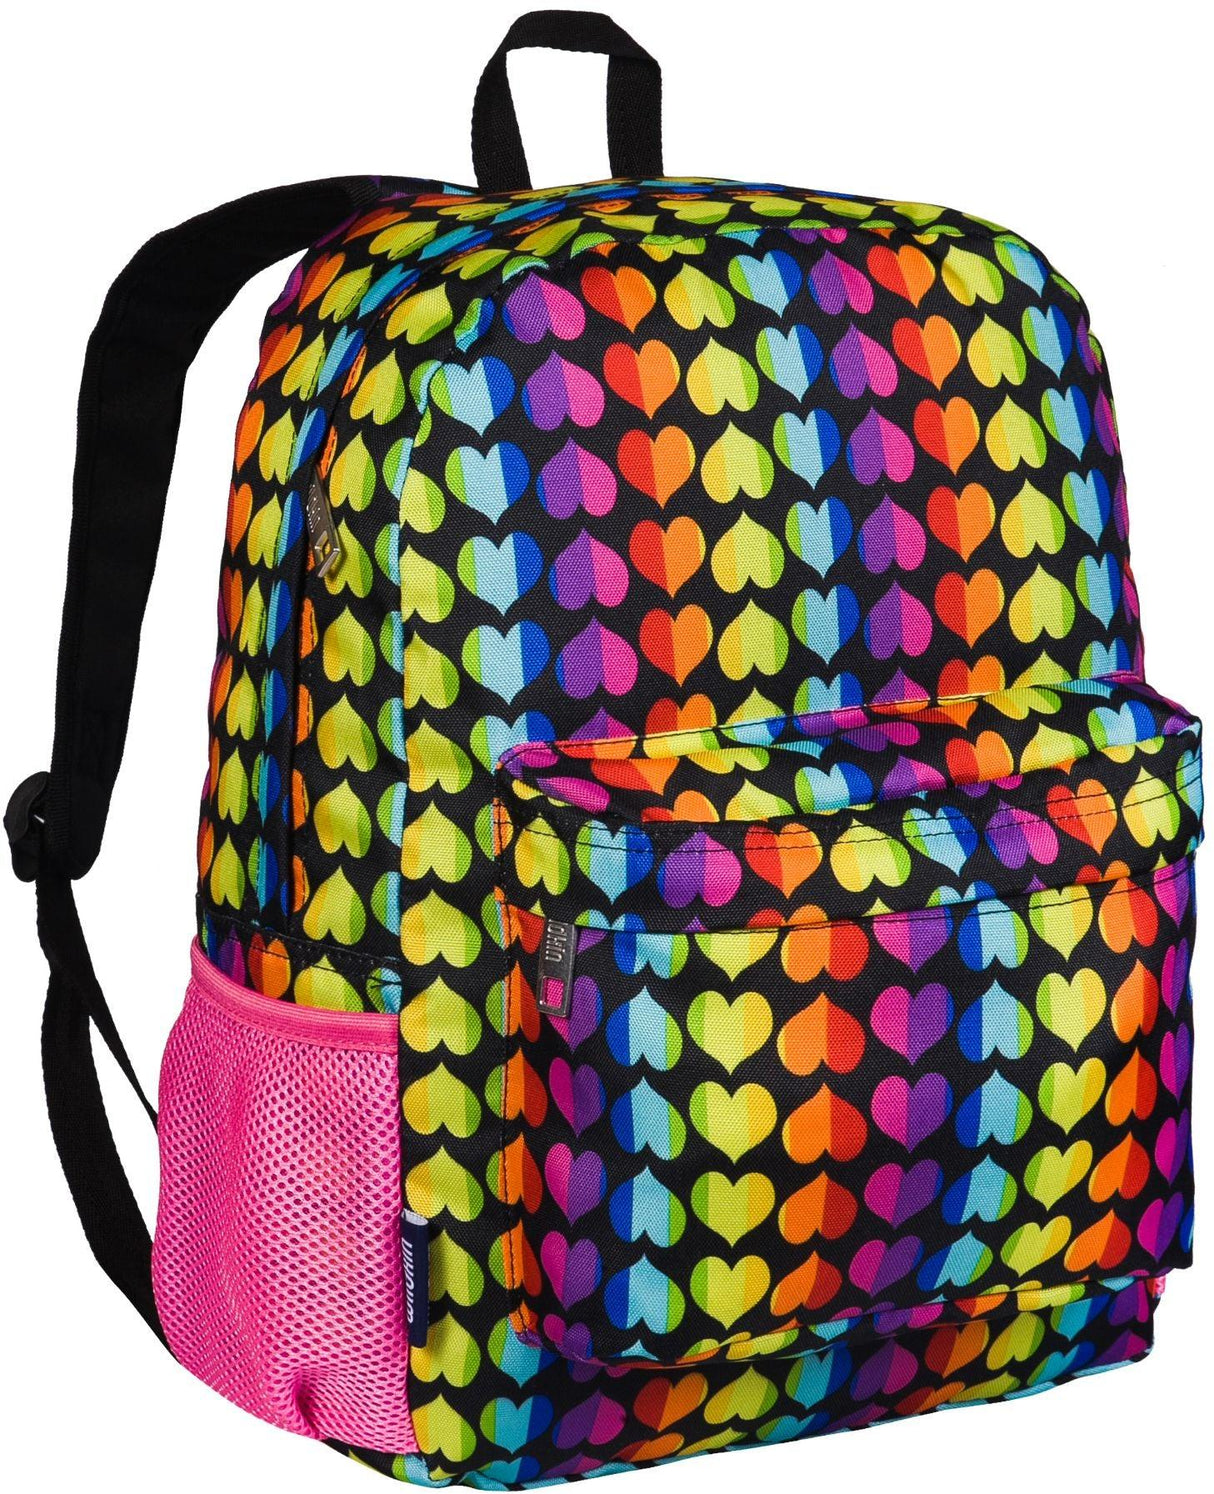 Wildkin Hearts Backpack - 57701